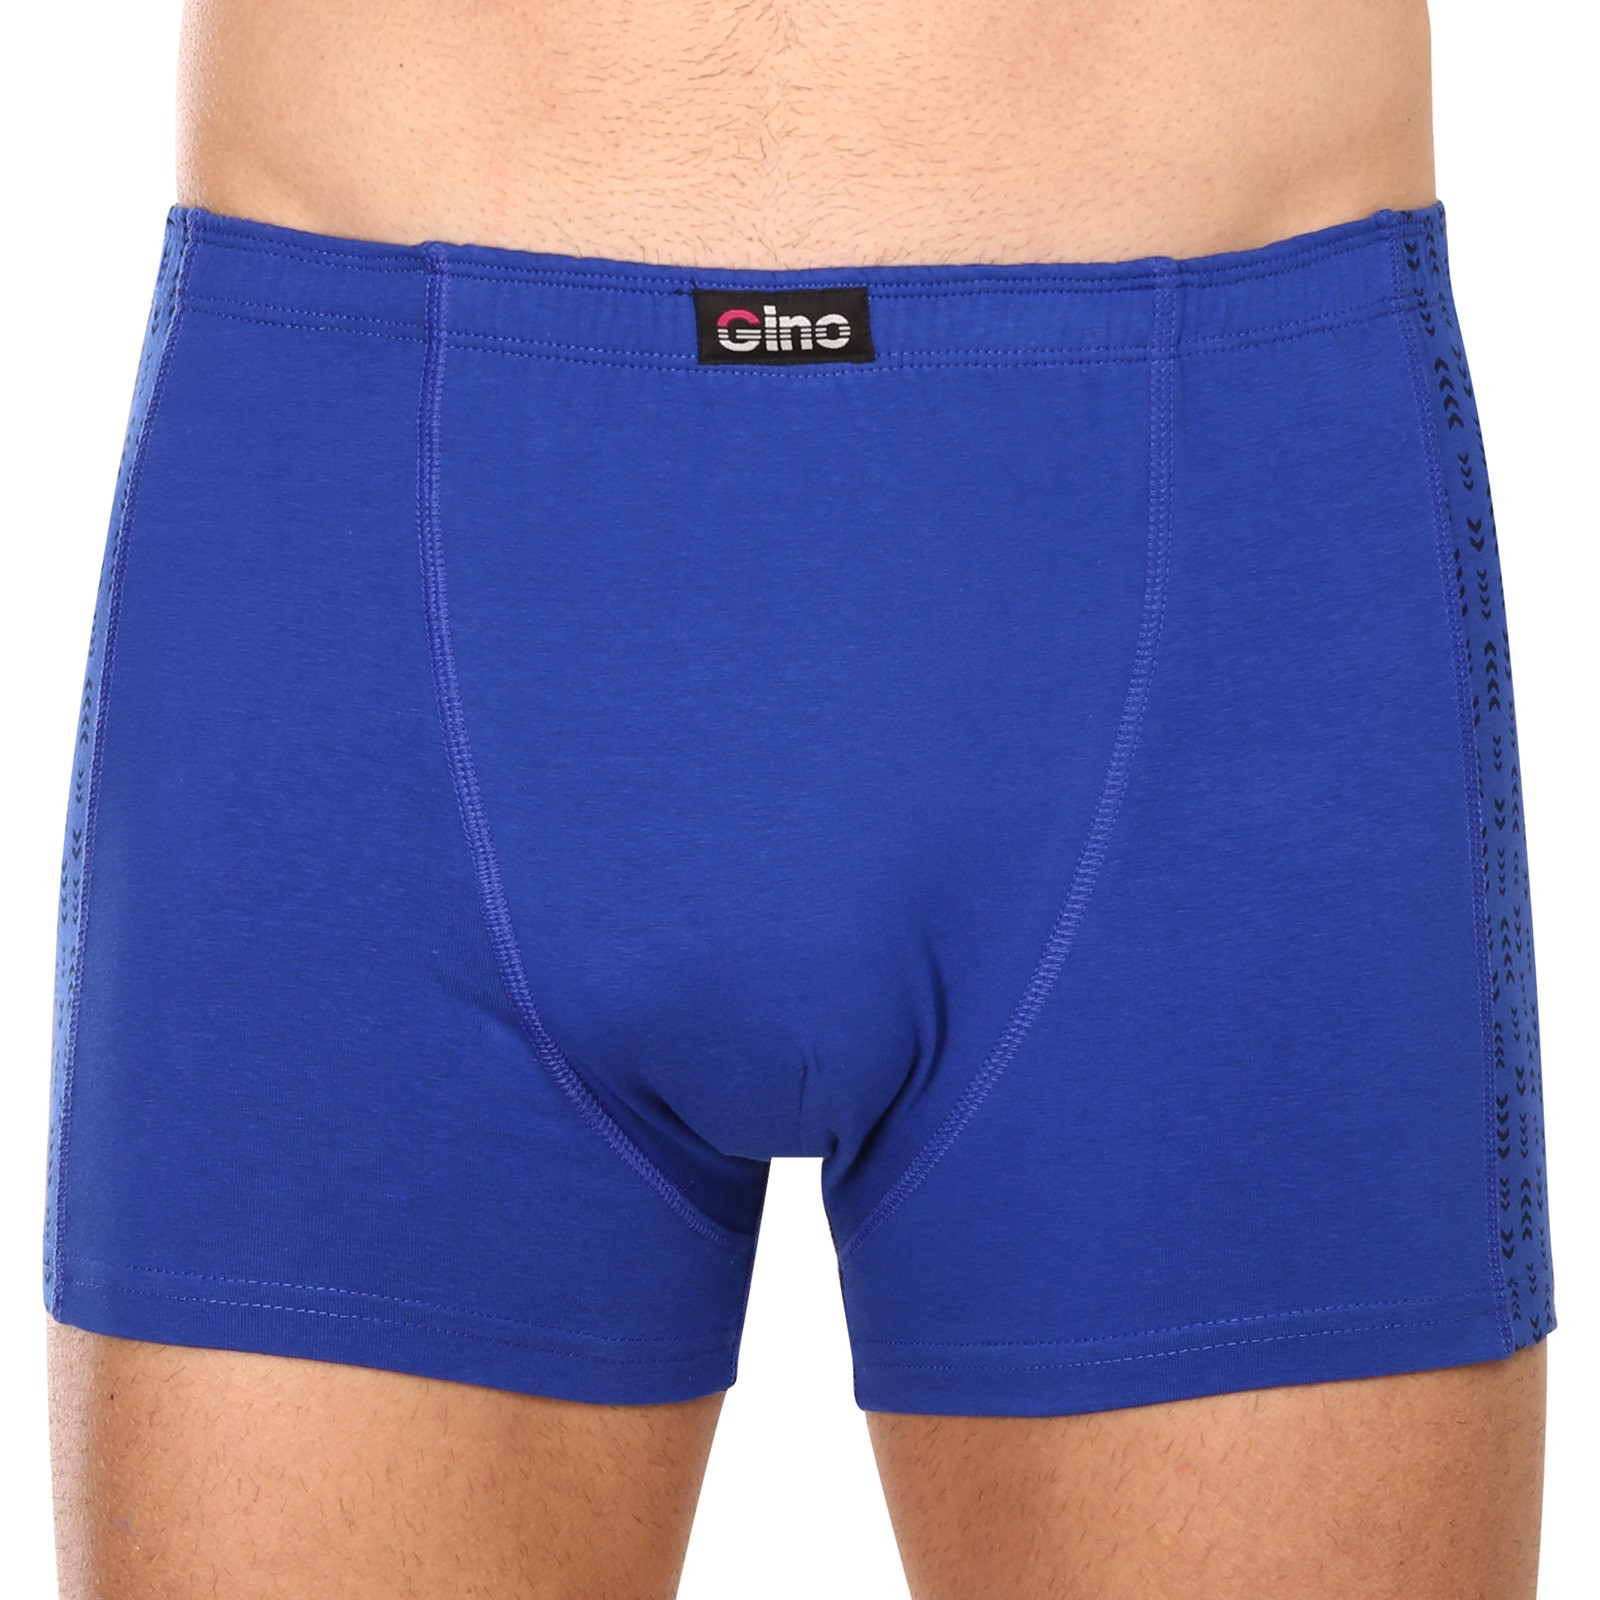 Men's boxers Gino blue